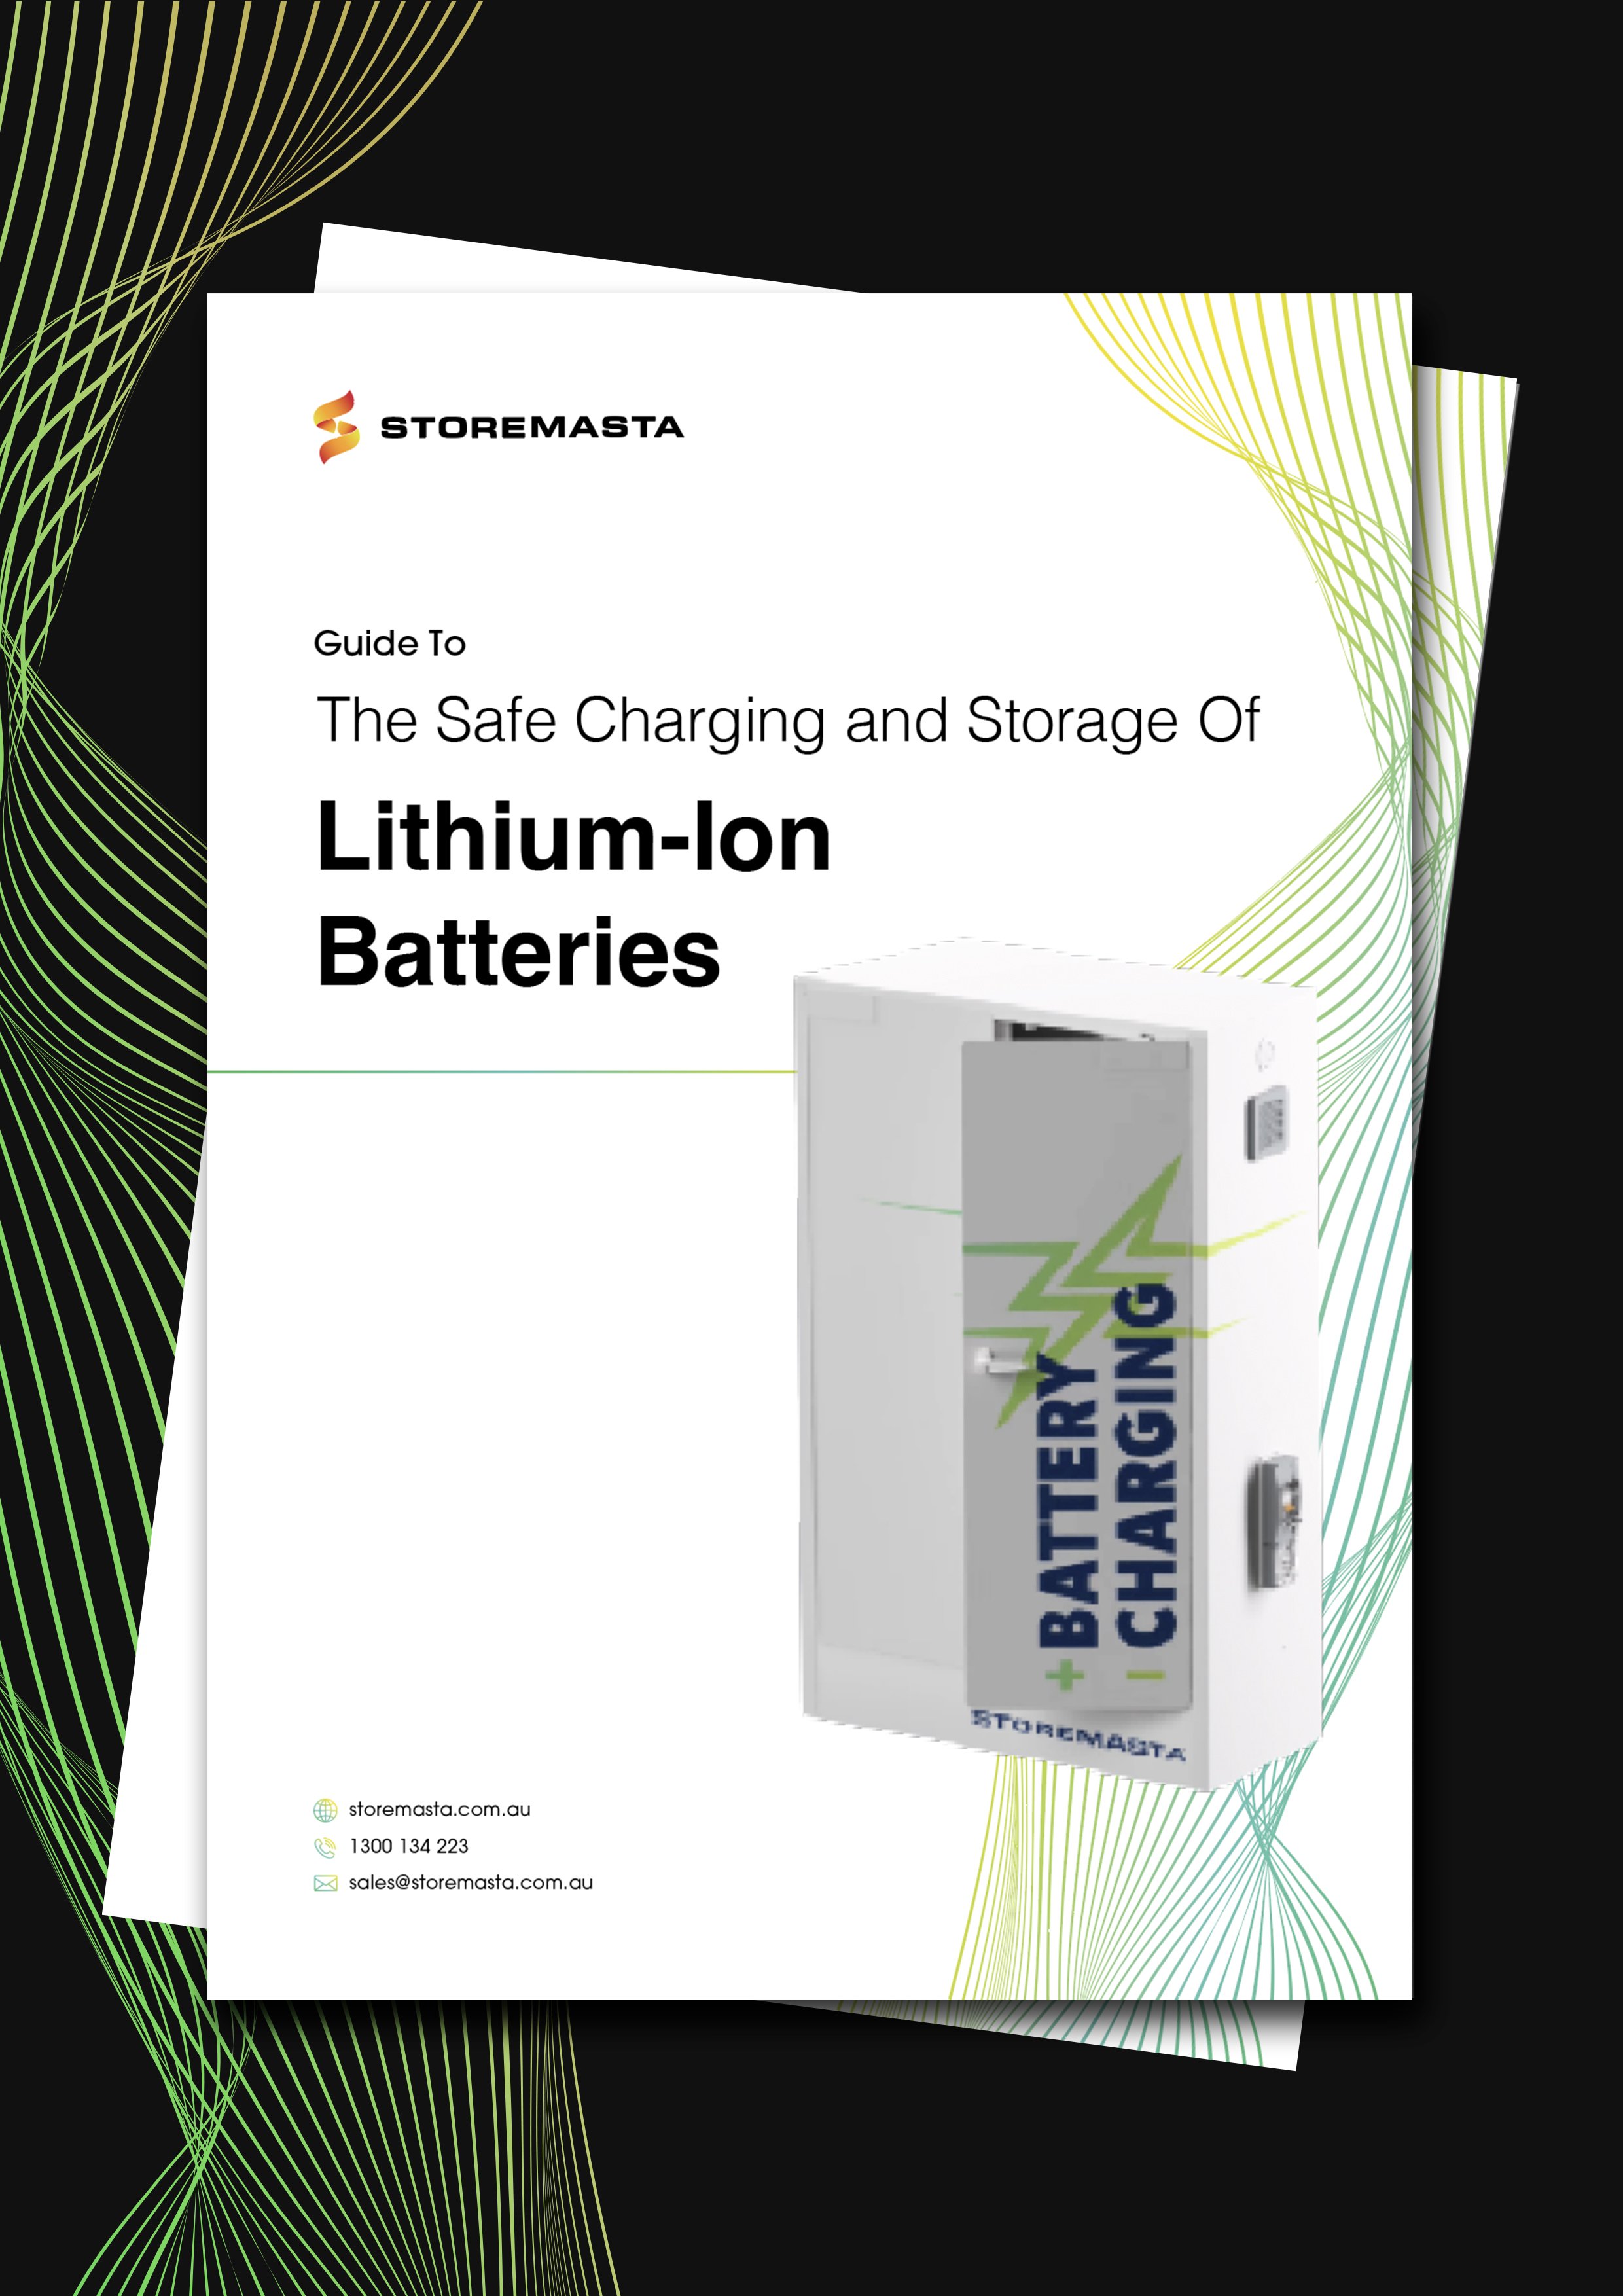 Li-ion batteries